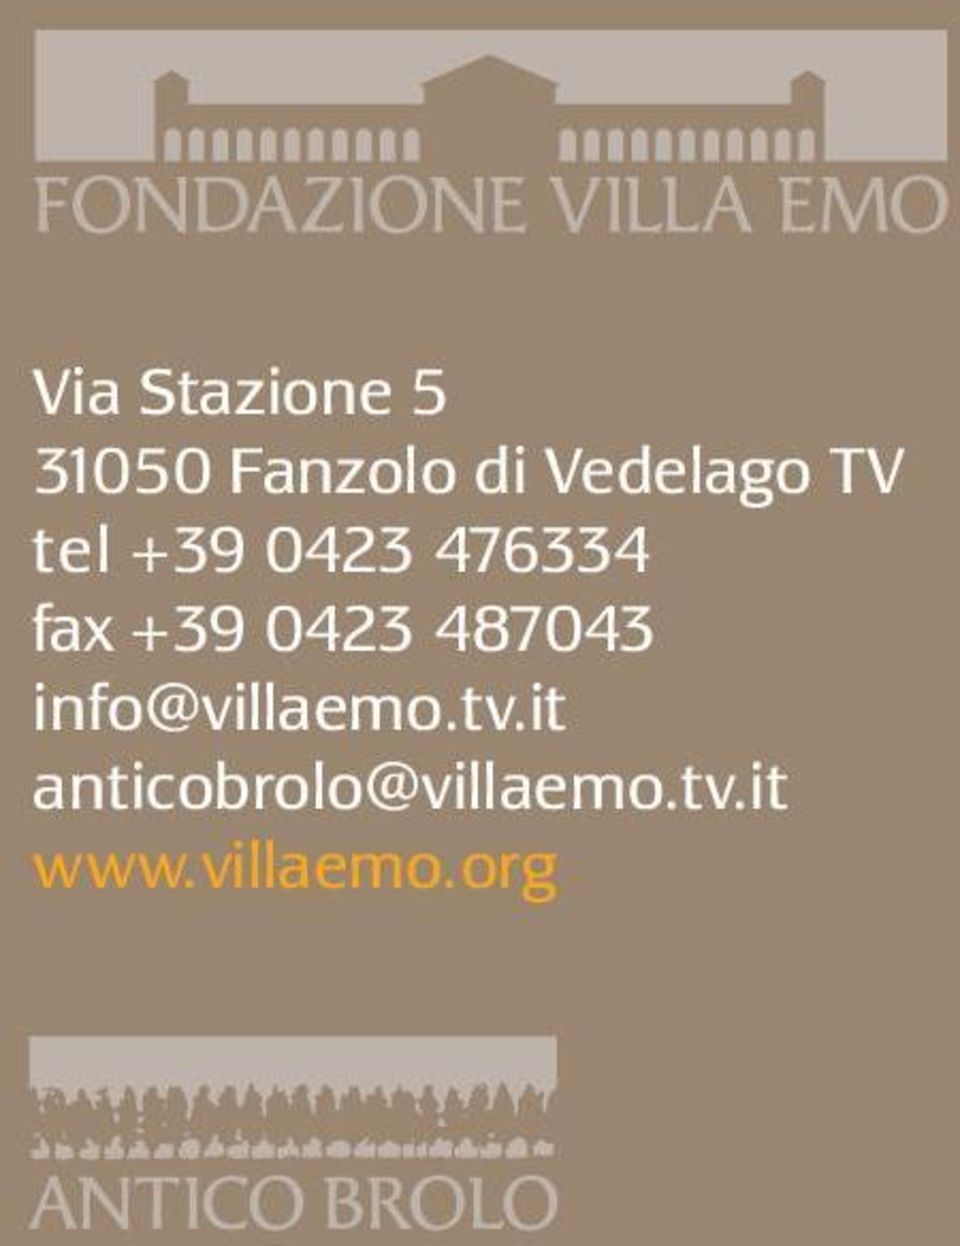 +39 0423 487043 info@villaemo.tv.